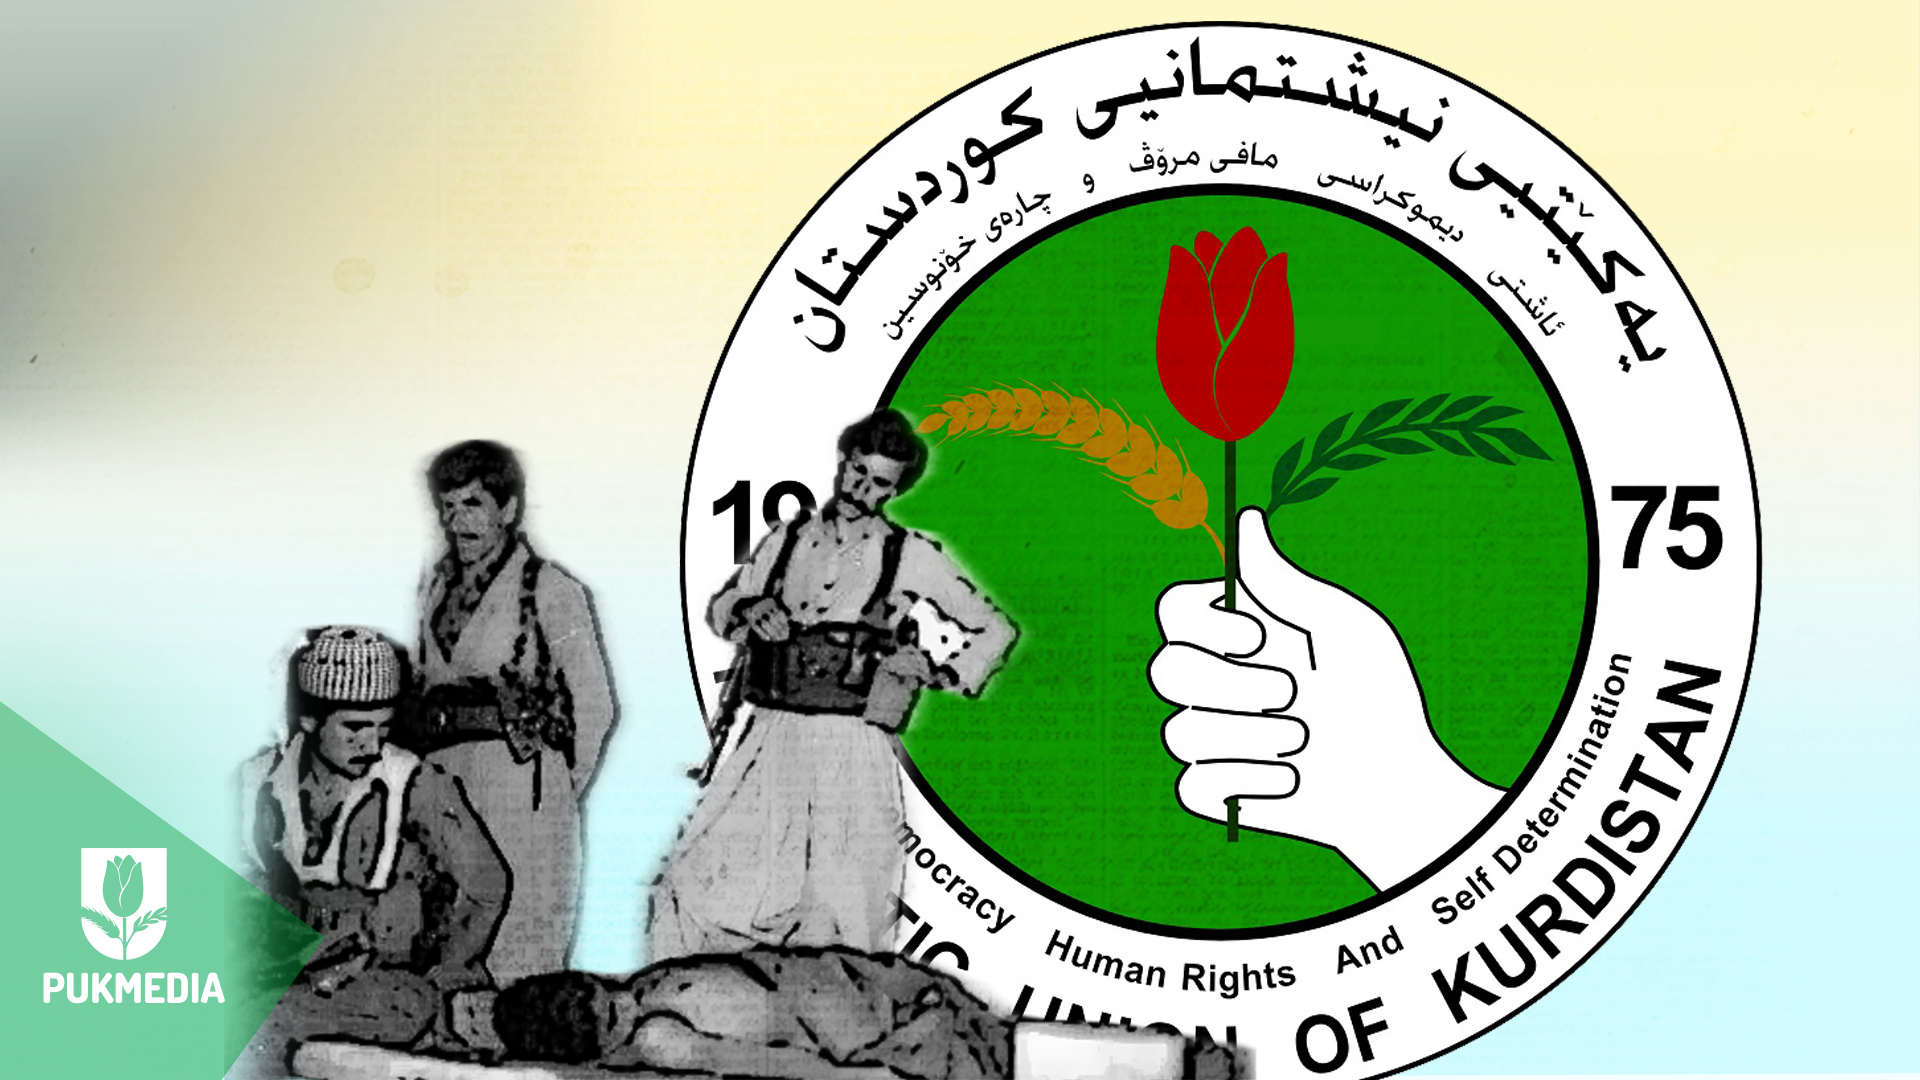  PUK logo and Peshmergas.